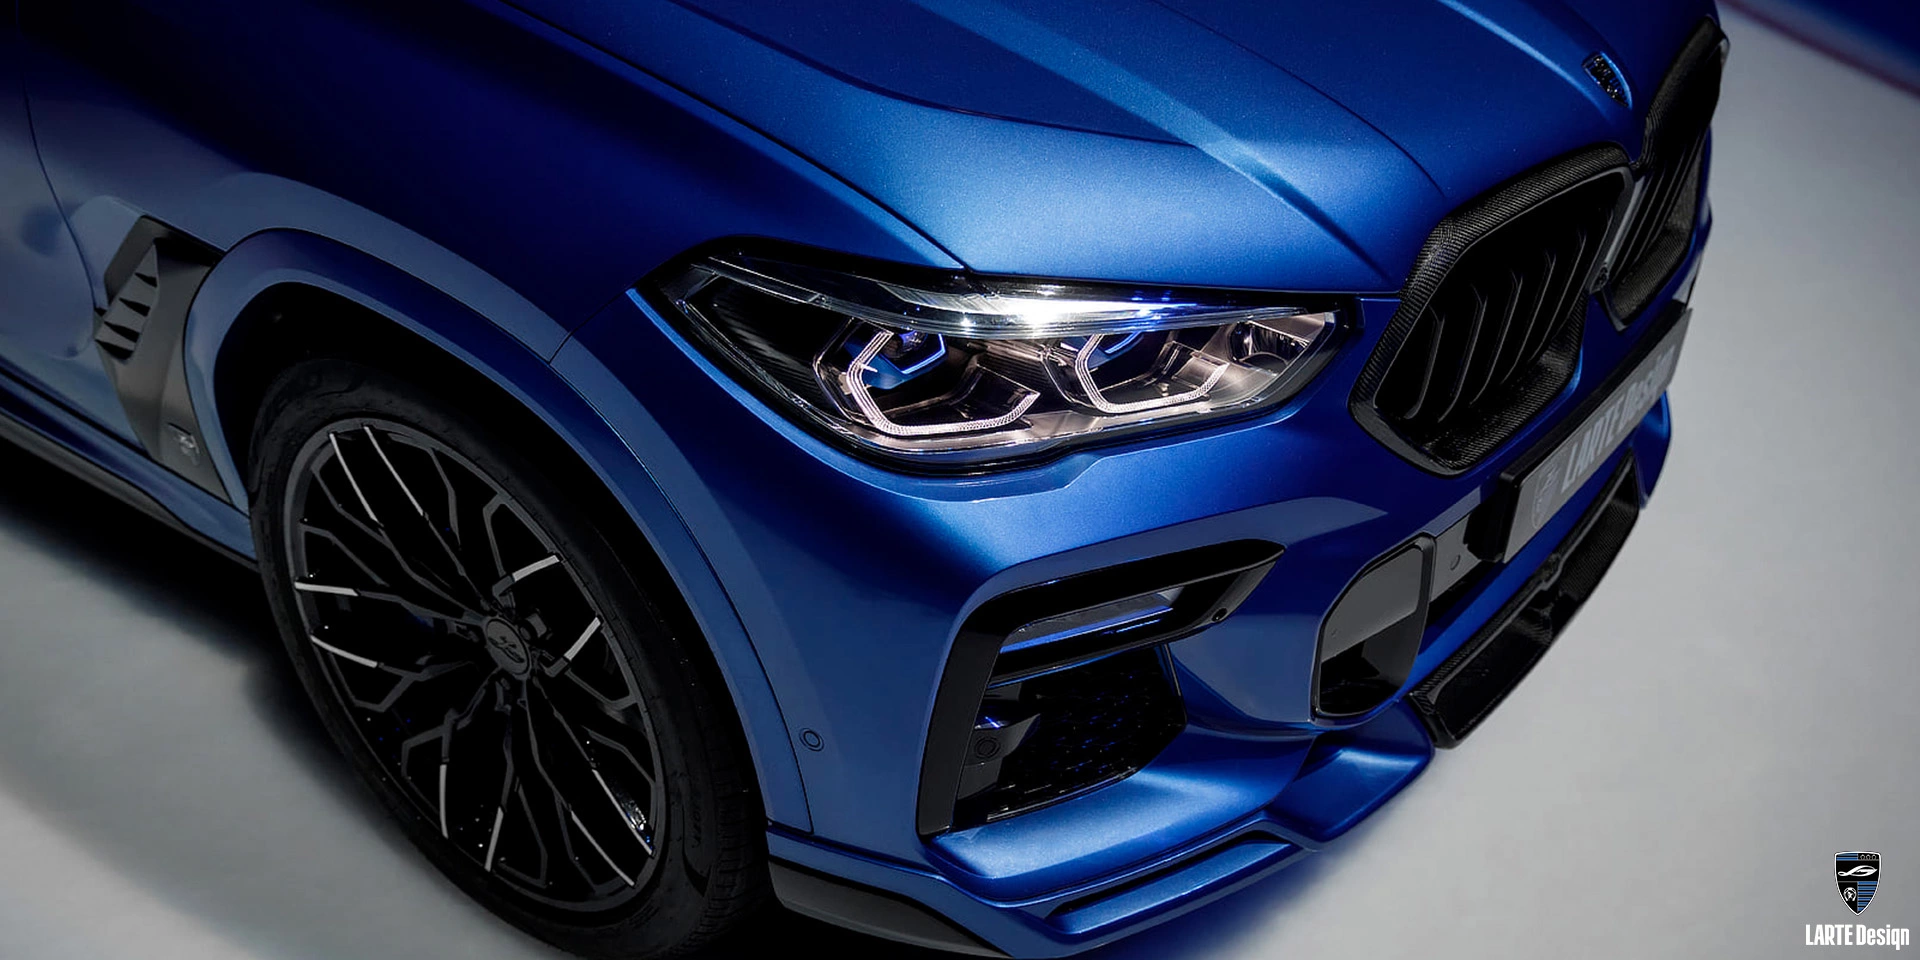 Order carbon fiber Exclusive Aerodynamic Parts for LARTE Performance BMW X6 M sport G06 Phytonic Blue Metallic